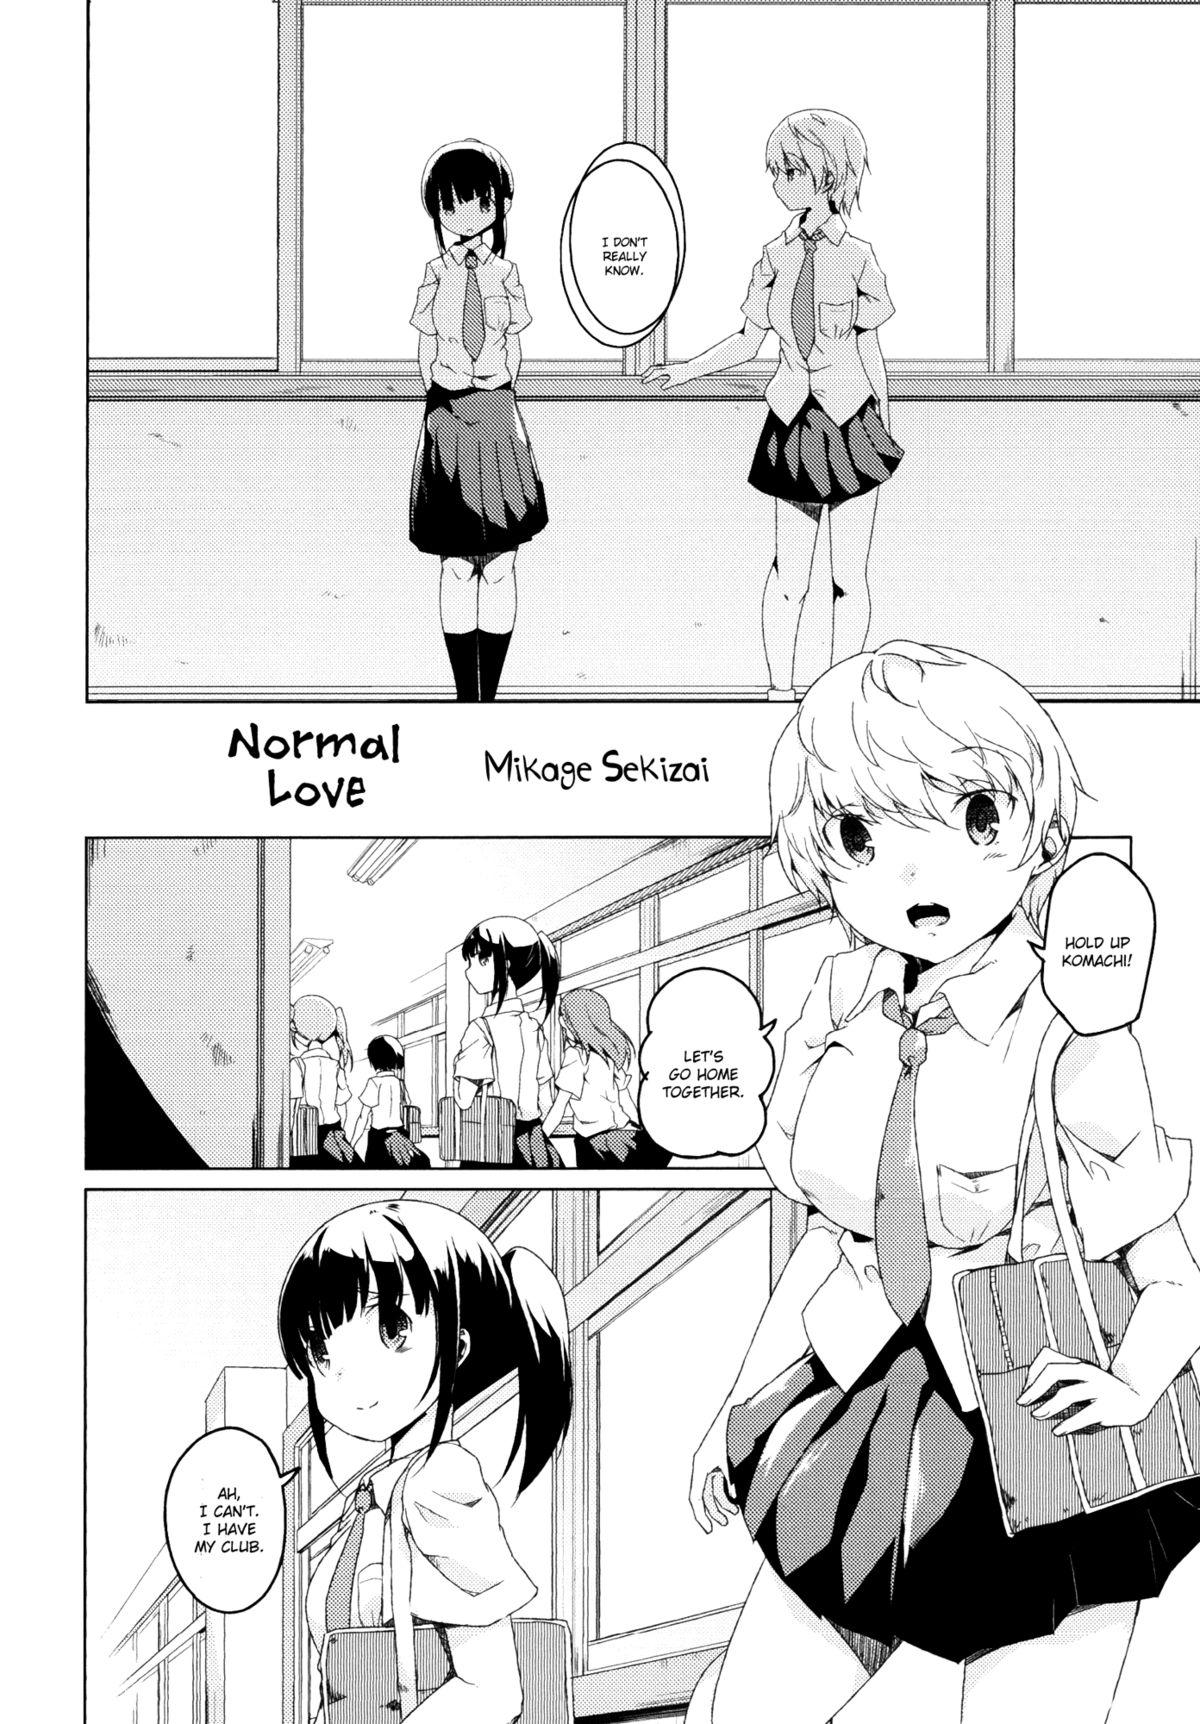 Fishnet Futsuu no Koi | Normal Love Scene - Page 2